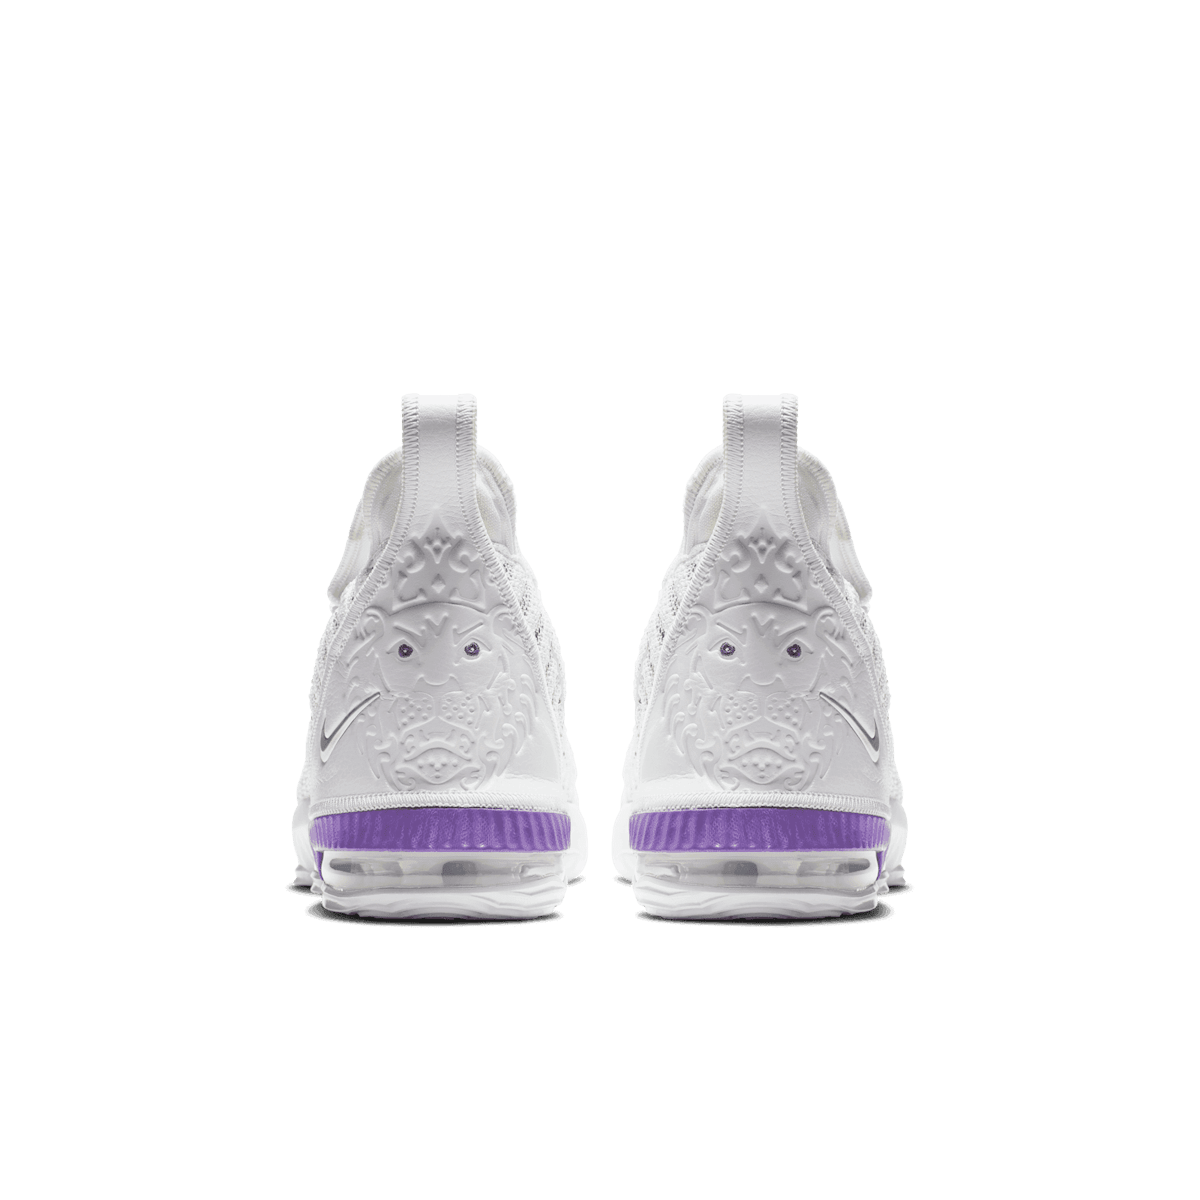 Nike LeBron 16 Buzz Lightyear (GS) - AQ2465-102 Raffles and Release Date